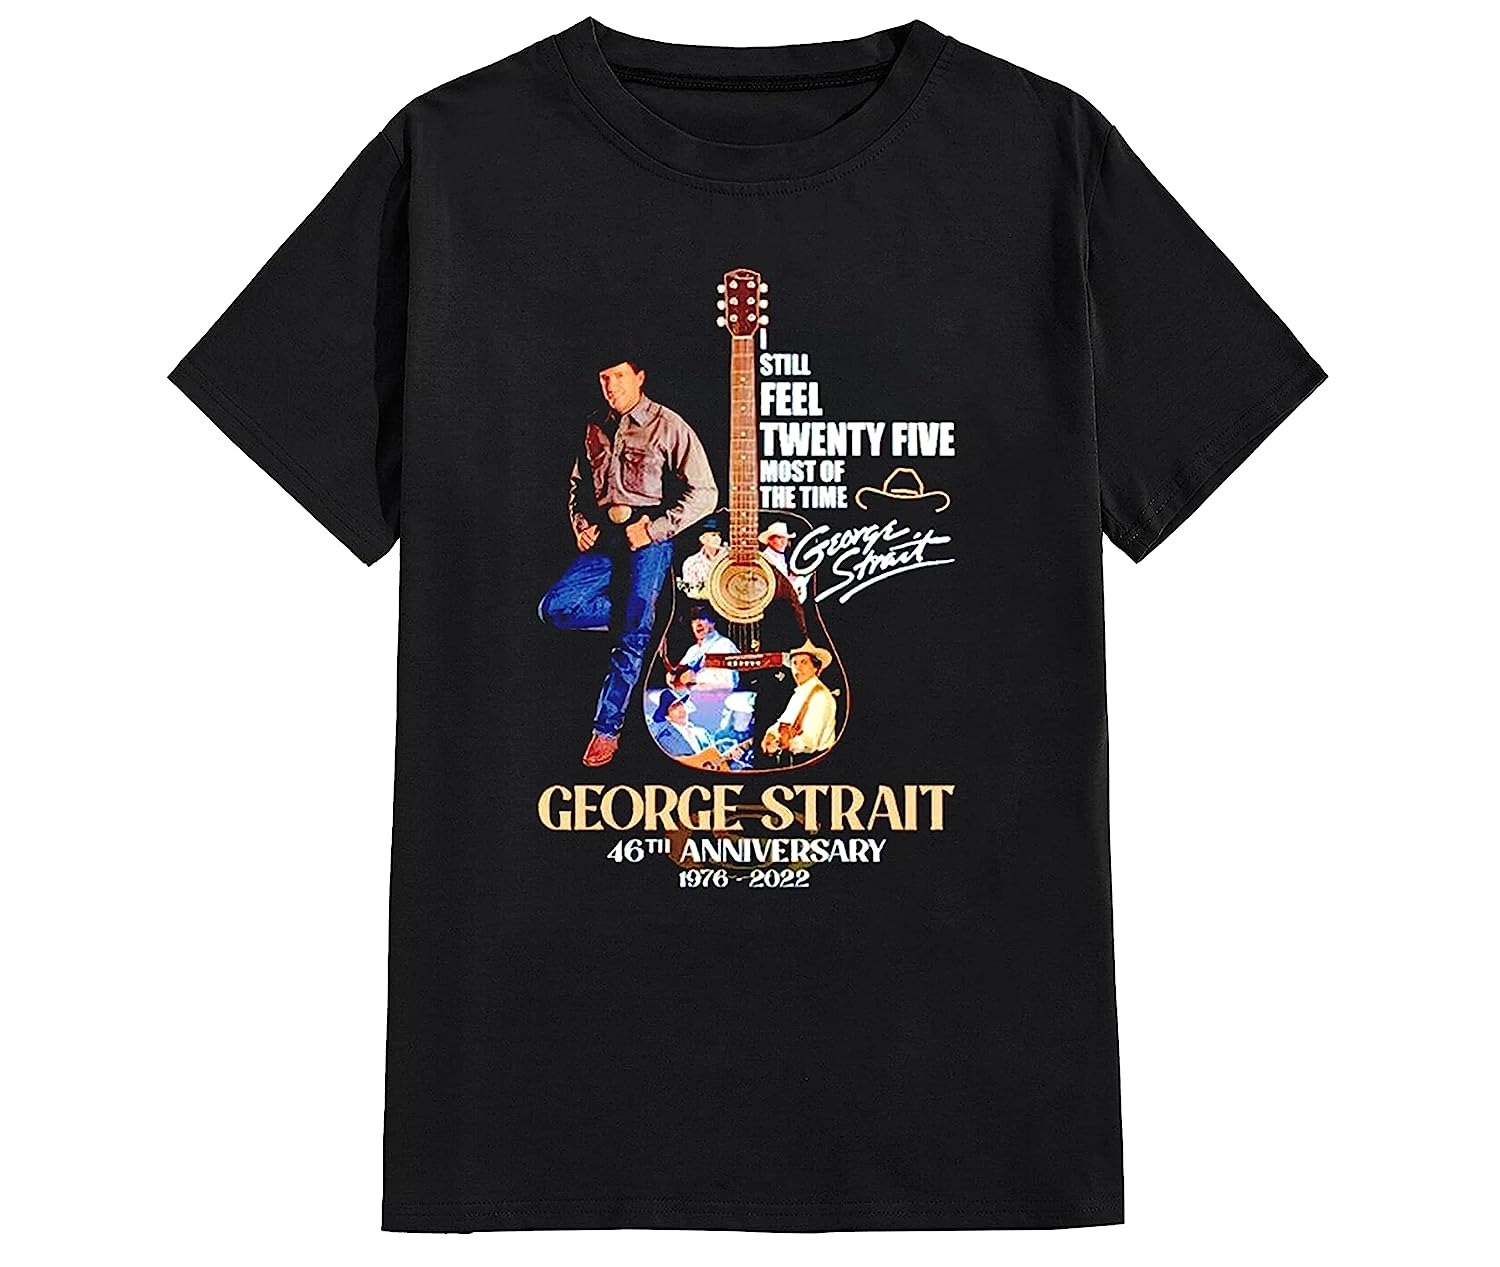 George Strait Shirt, George Strait 46th Anniversary 1976-2022 Shirt, Gift For Fan George Strait Shirt, Graphic Tee, Shirt For Men Women